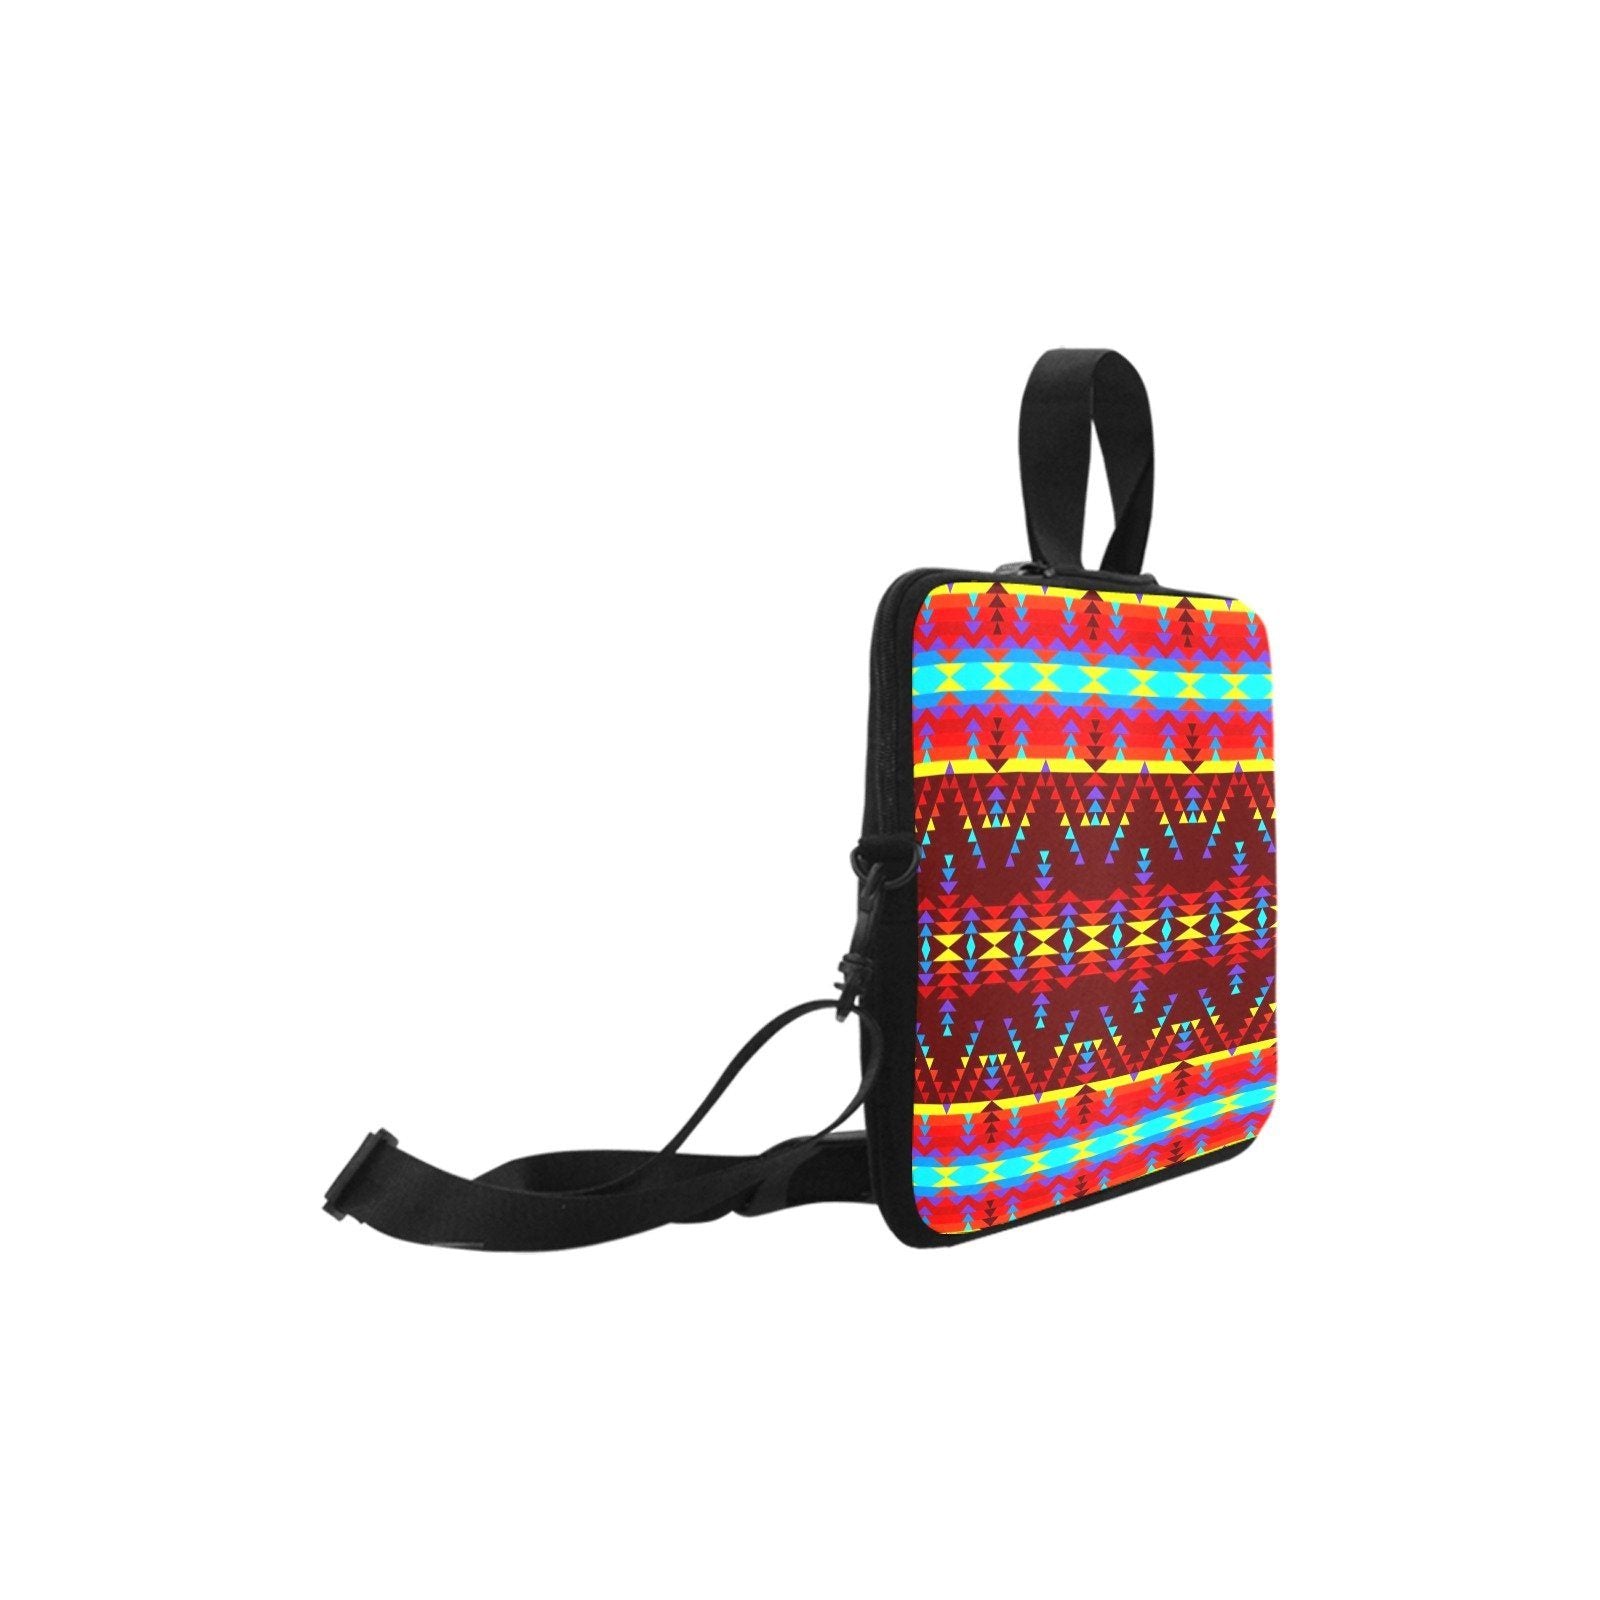 Visions of Lasting Peace Laptop Handbags 14" bag e-joyer 